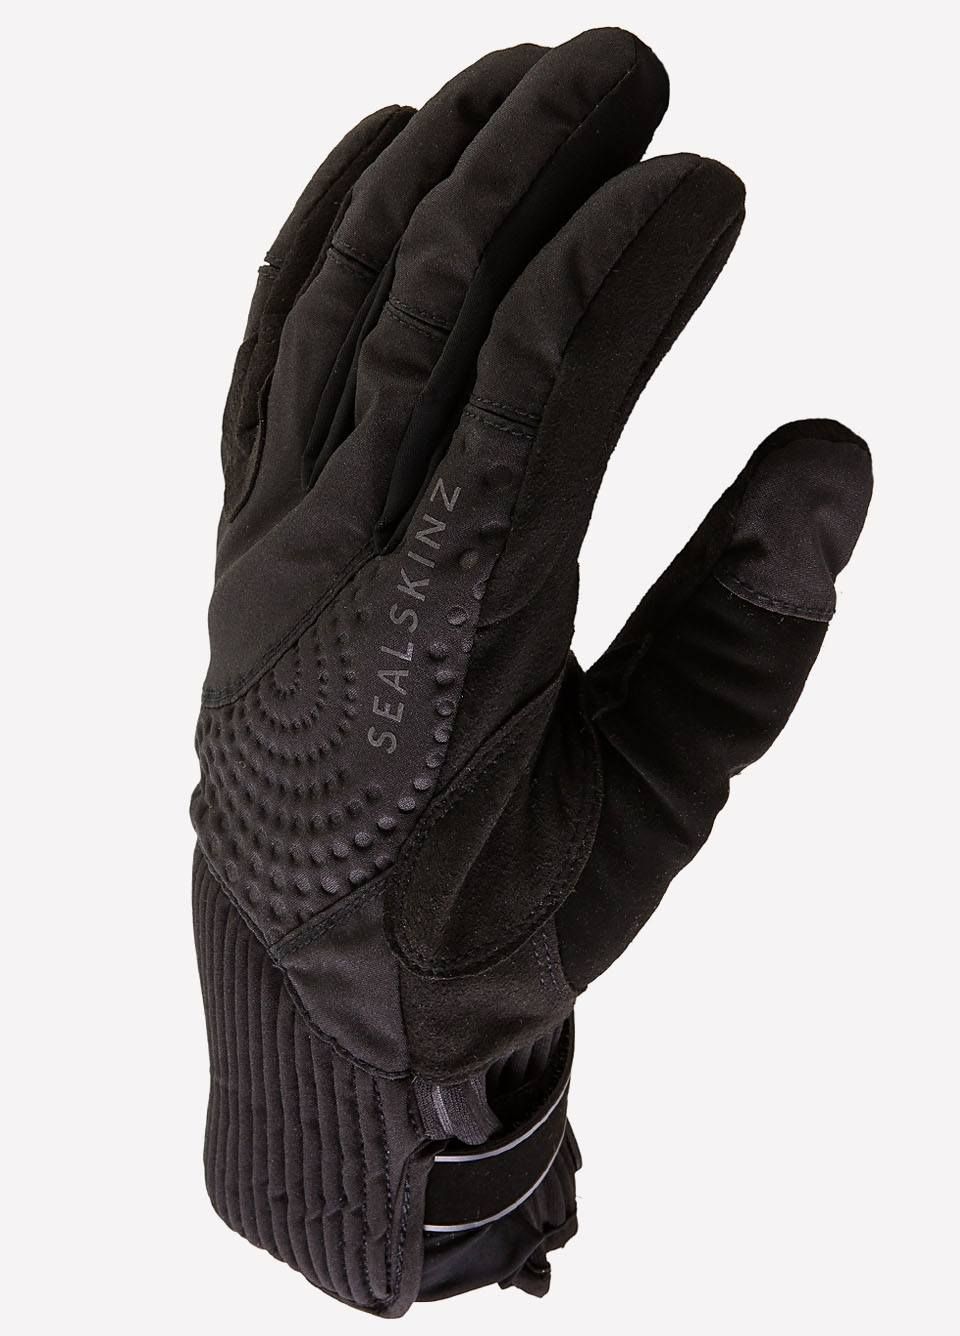 Review: Sealskinz Women's Winter Gloves